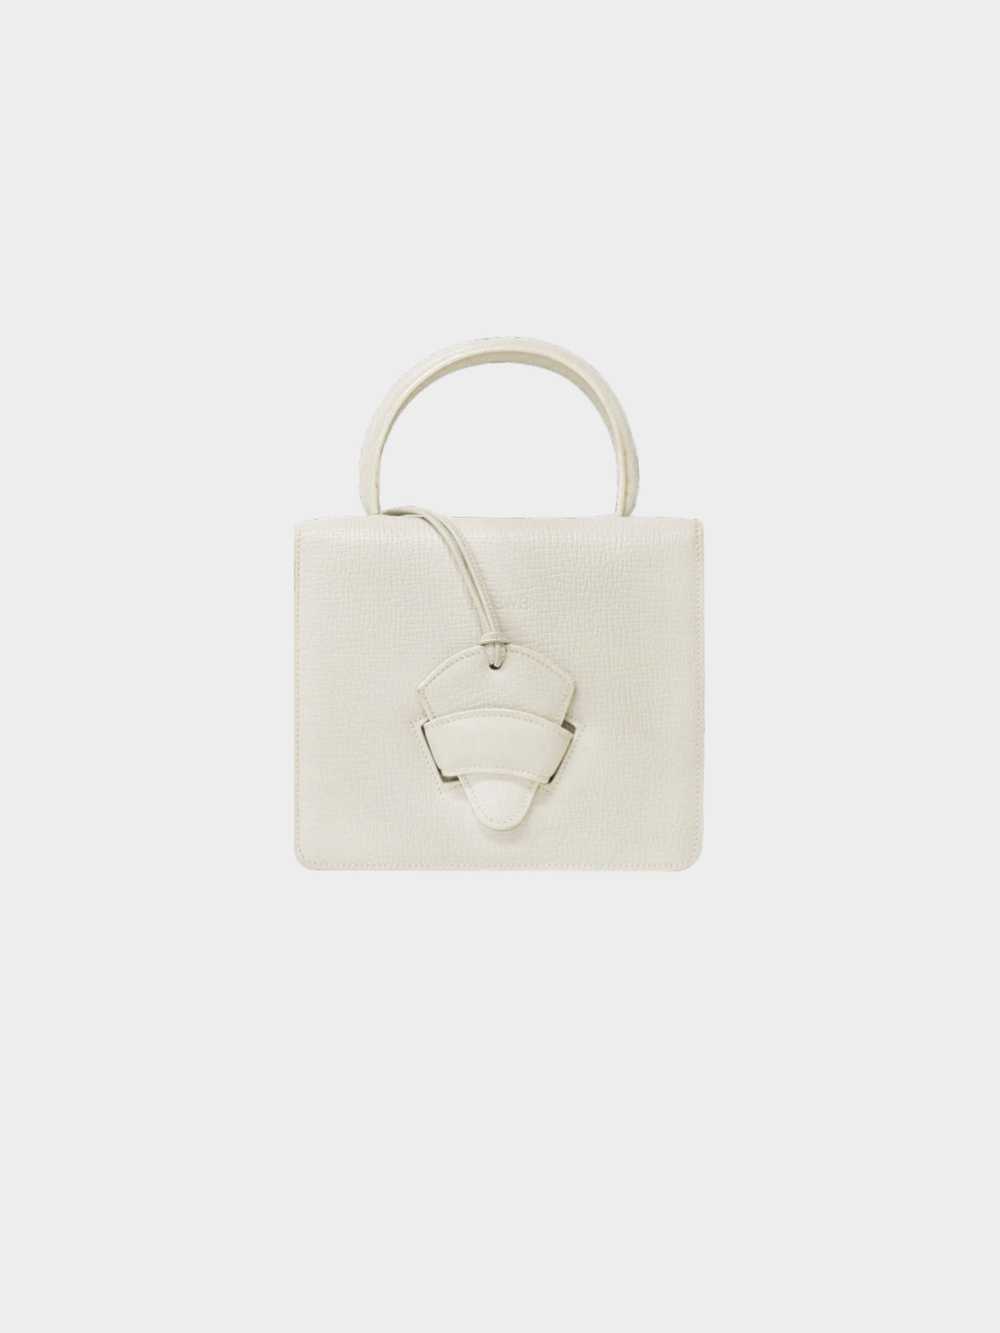 Loewe 2010s White Barcelona Handbag - image 1